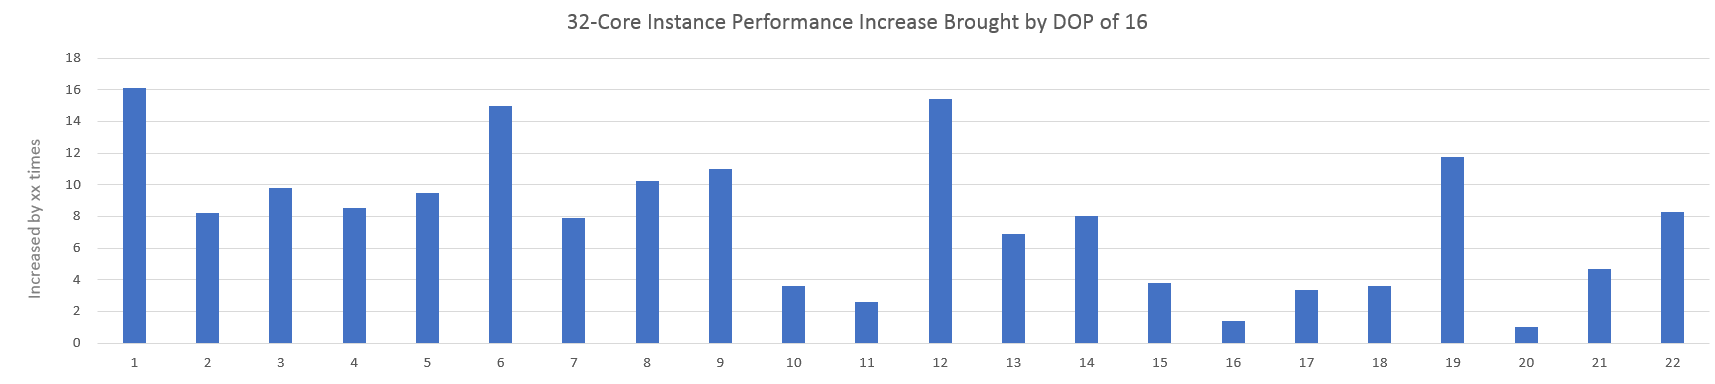 Performance improvement